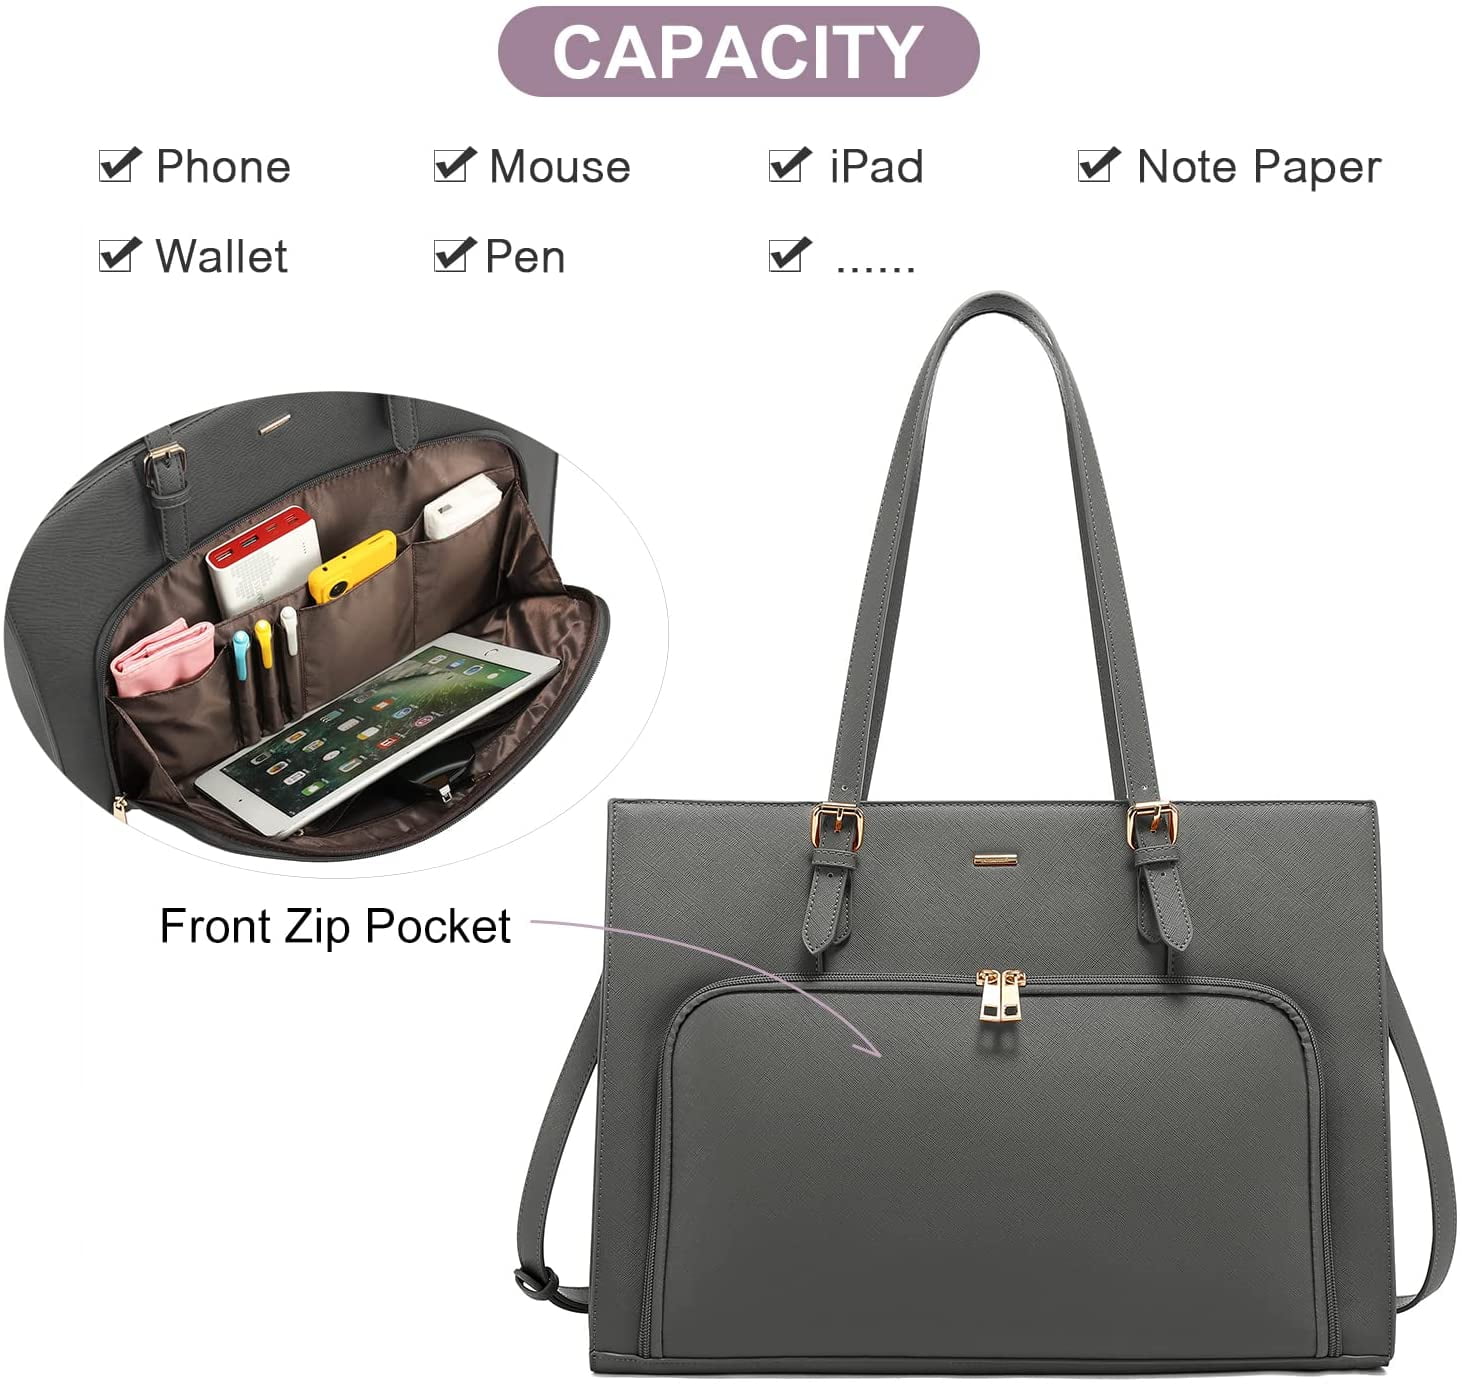 KTMOUW Laptop Bag for Women 15.6 Inch Waterproof Leather Briefcase